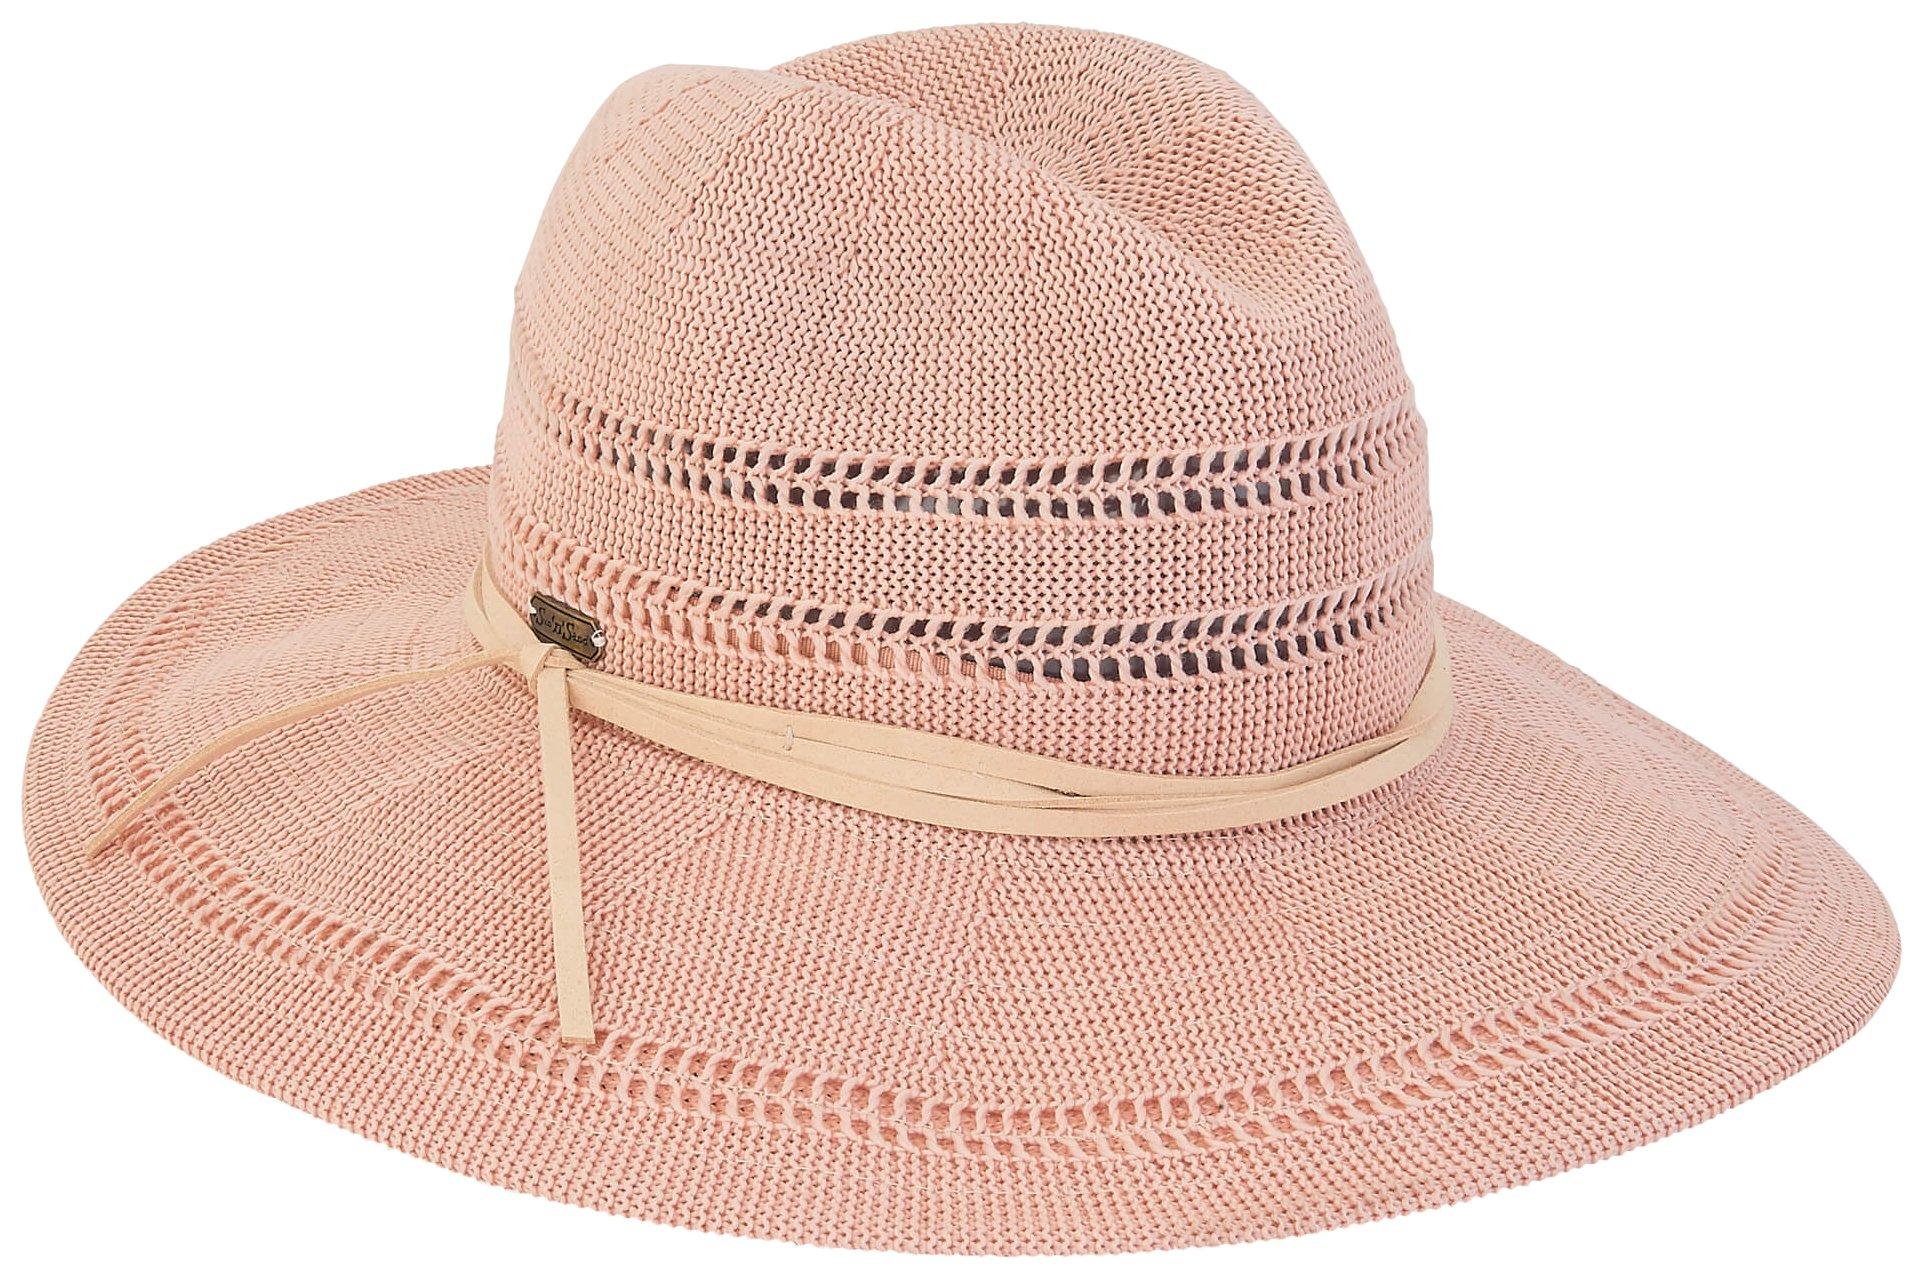 Sun N' Sand Womens Parker Braid Safari Hat